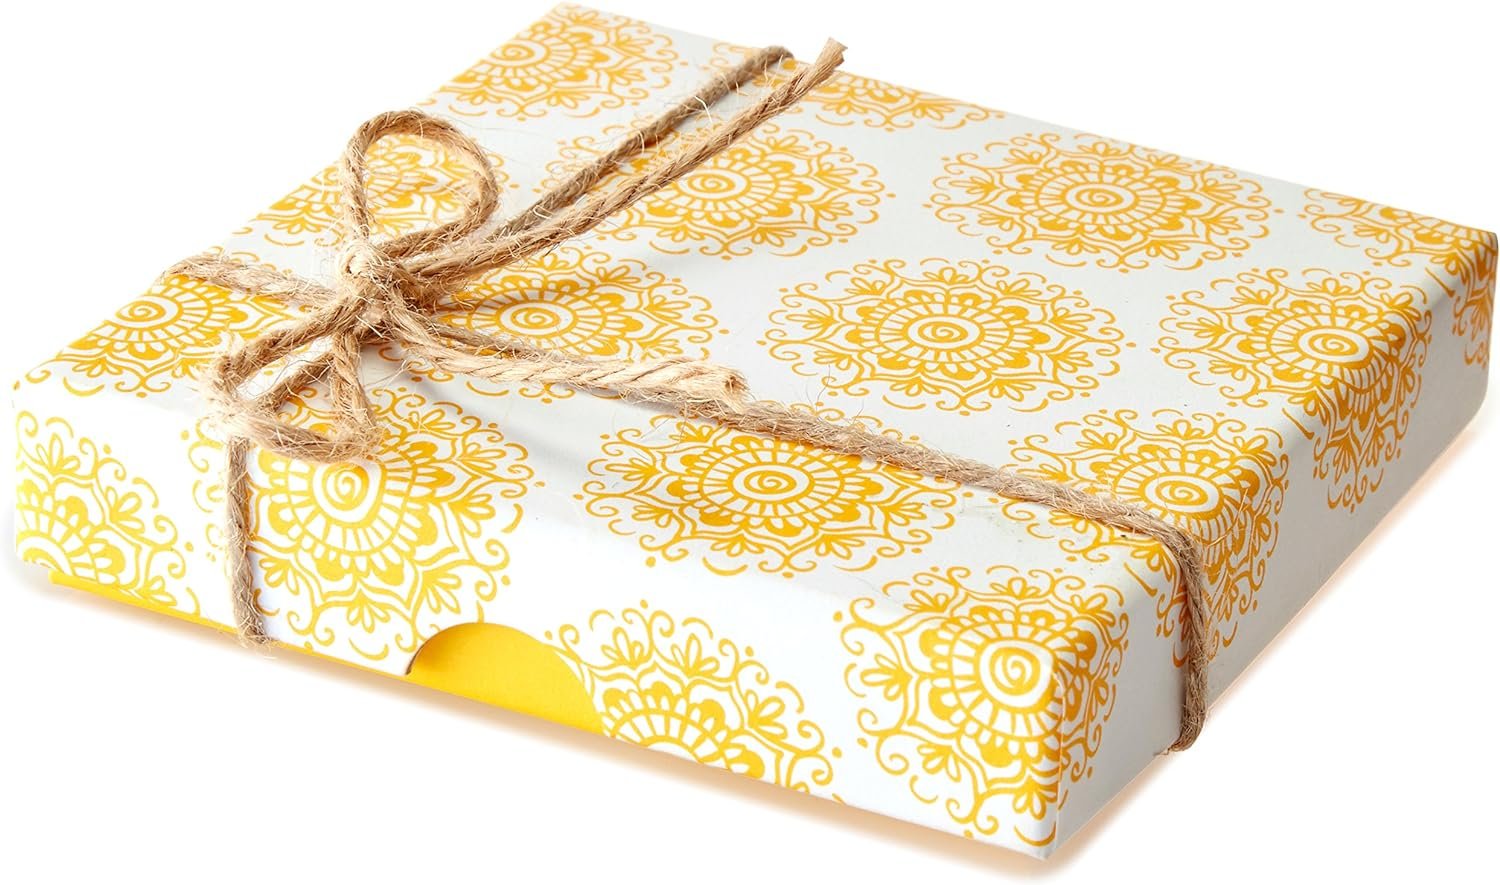 Yellow Swirl Box Gift Card Review